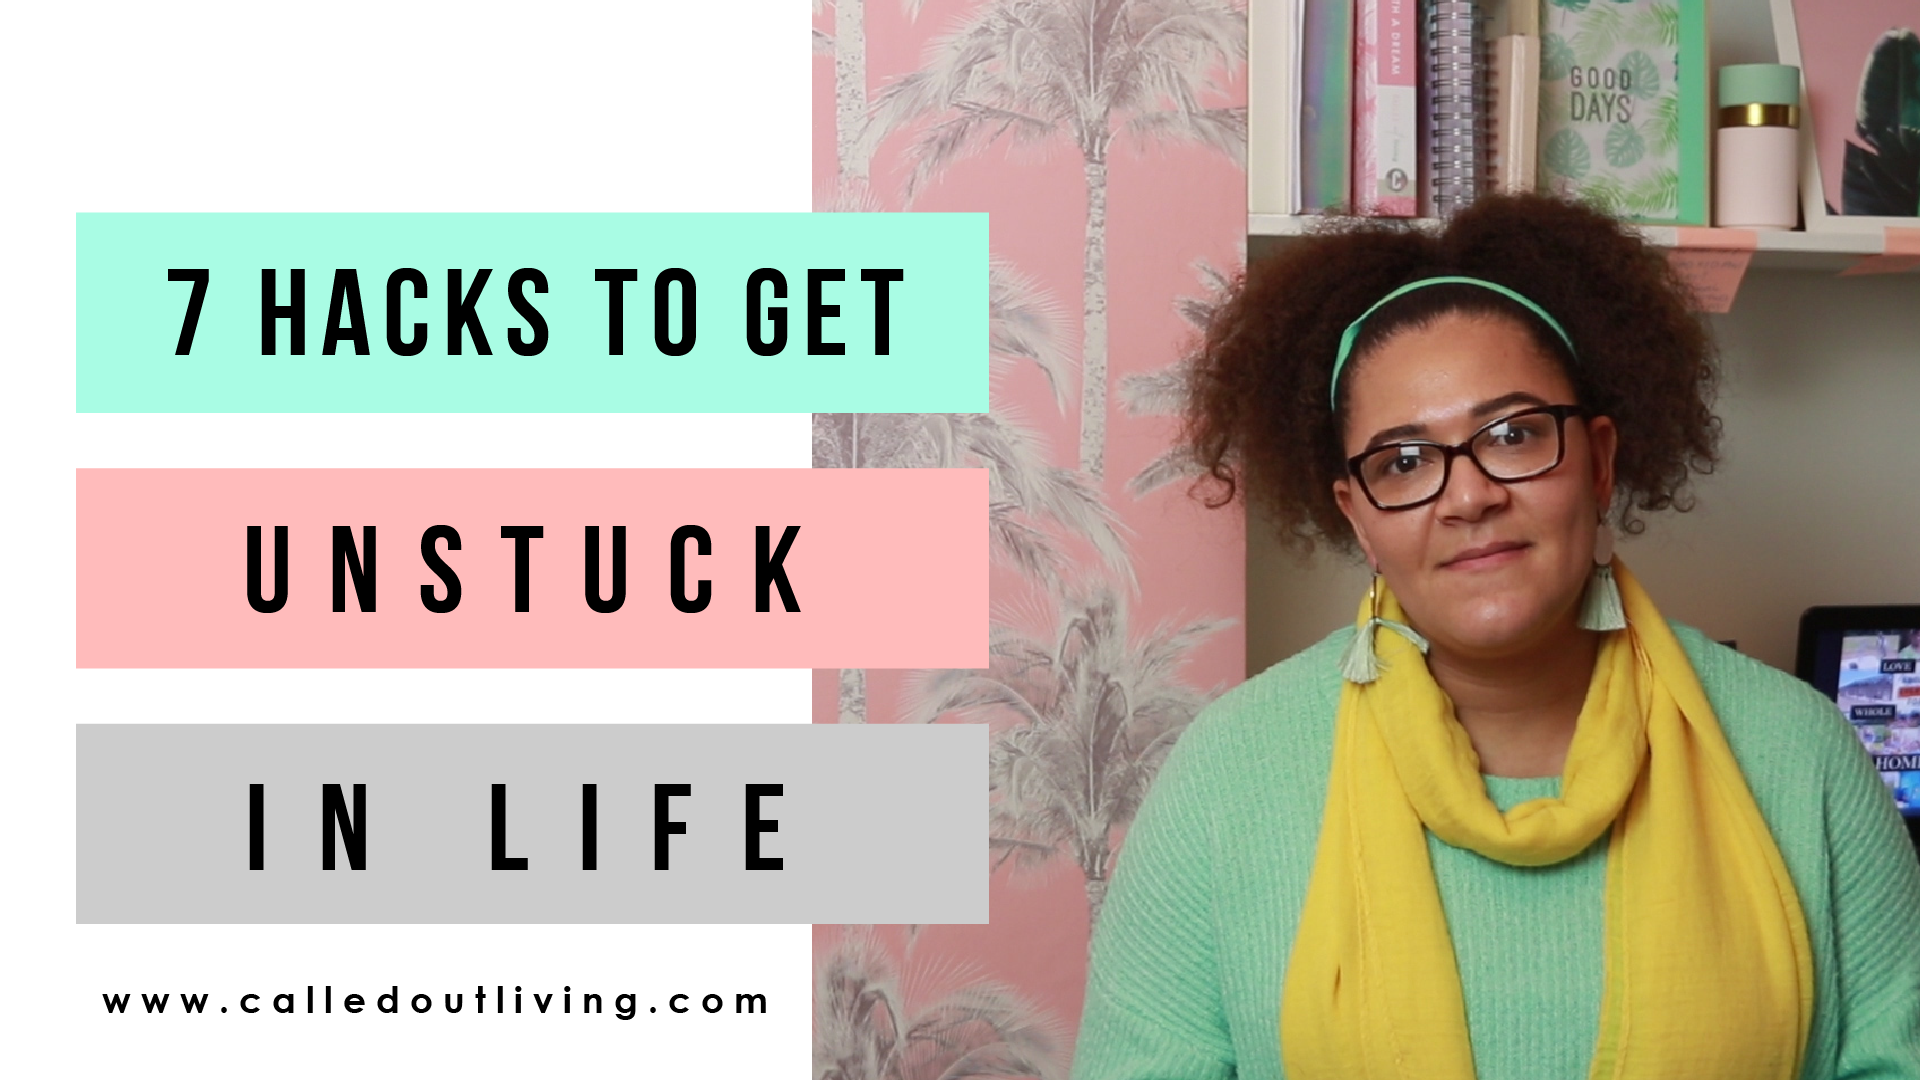 how to Get unstuck in life 7 hacks for momentum - take action - set goals - make plans - female entrepreneurs